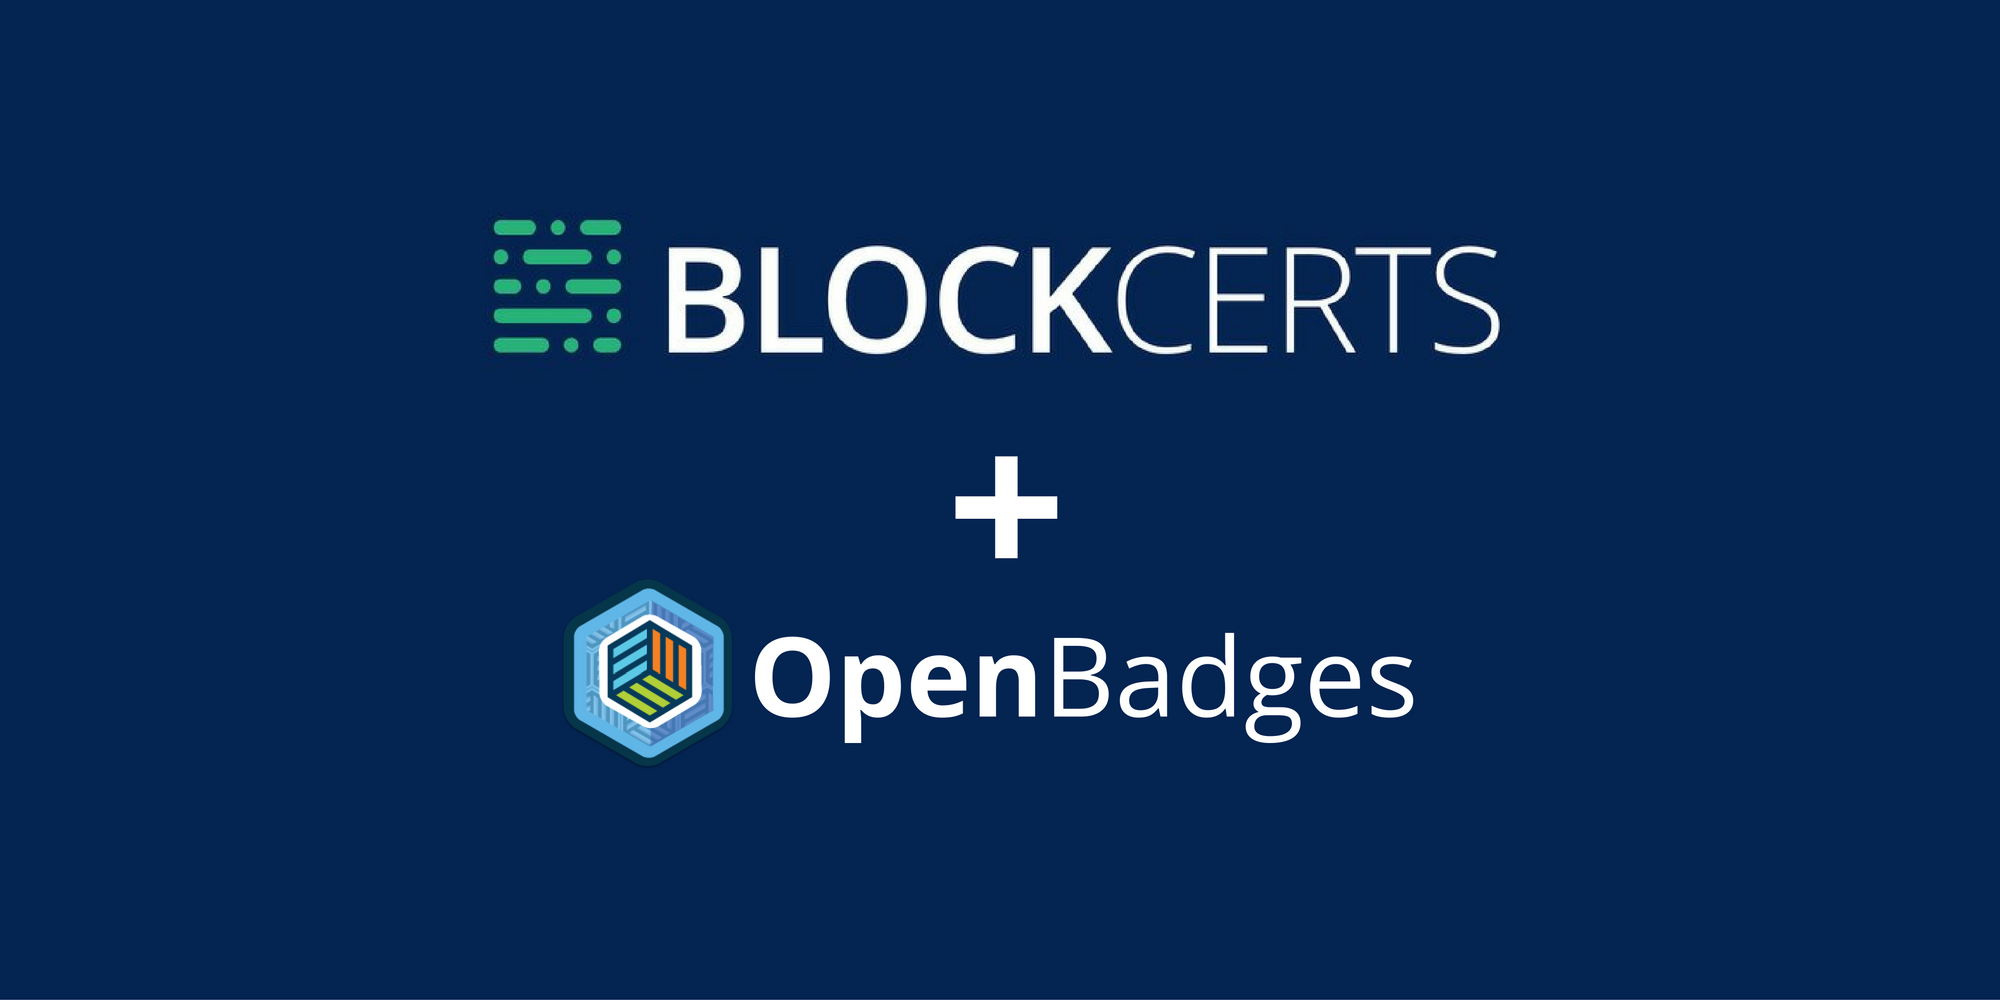 Blockcerts + Open Badges